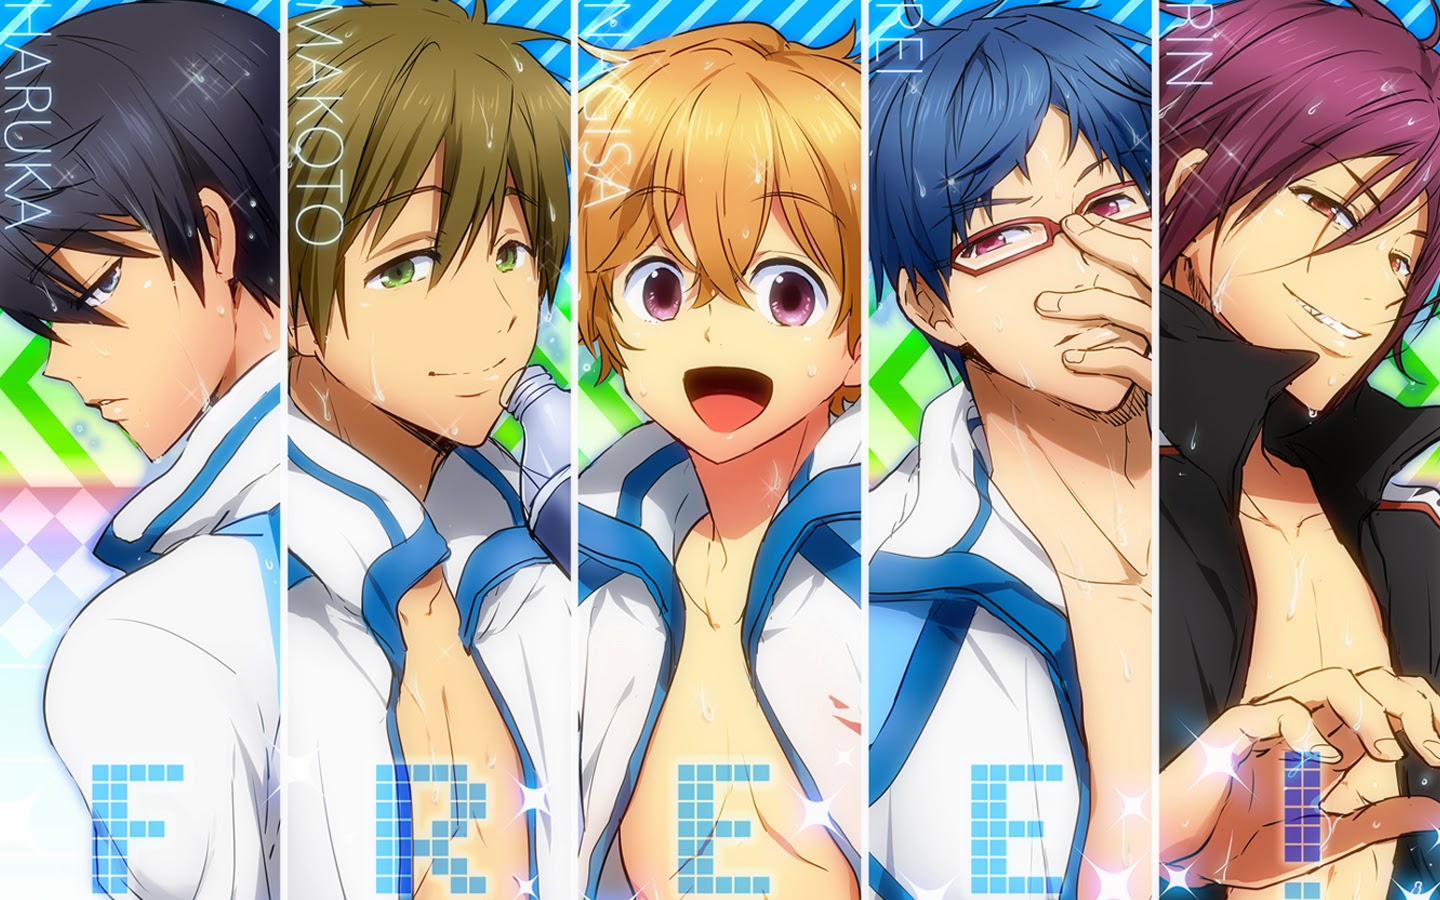 Free! Iwatobi Swim Club - Anime Wallpaper (37072414) - Fanpop